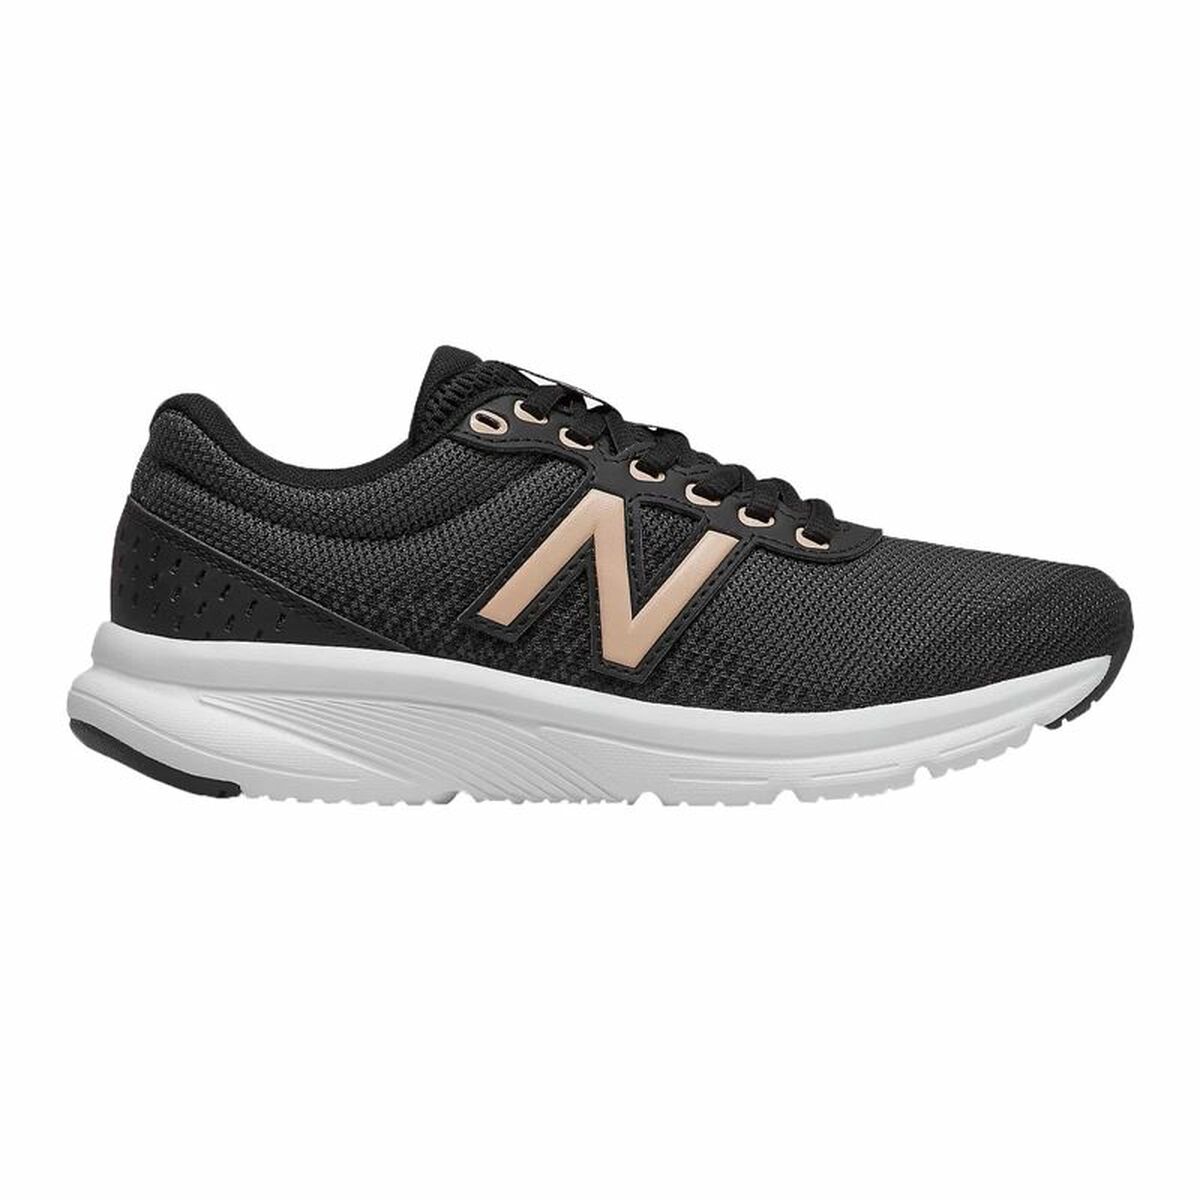 New Balance 411 v2 Running Shoes Adults